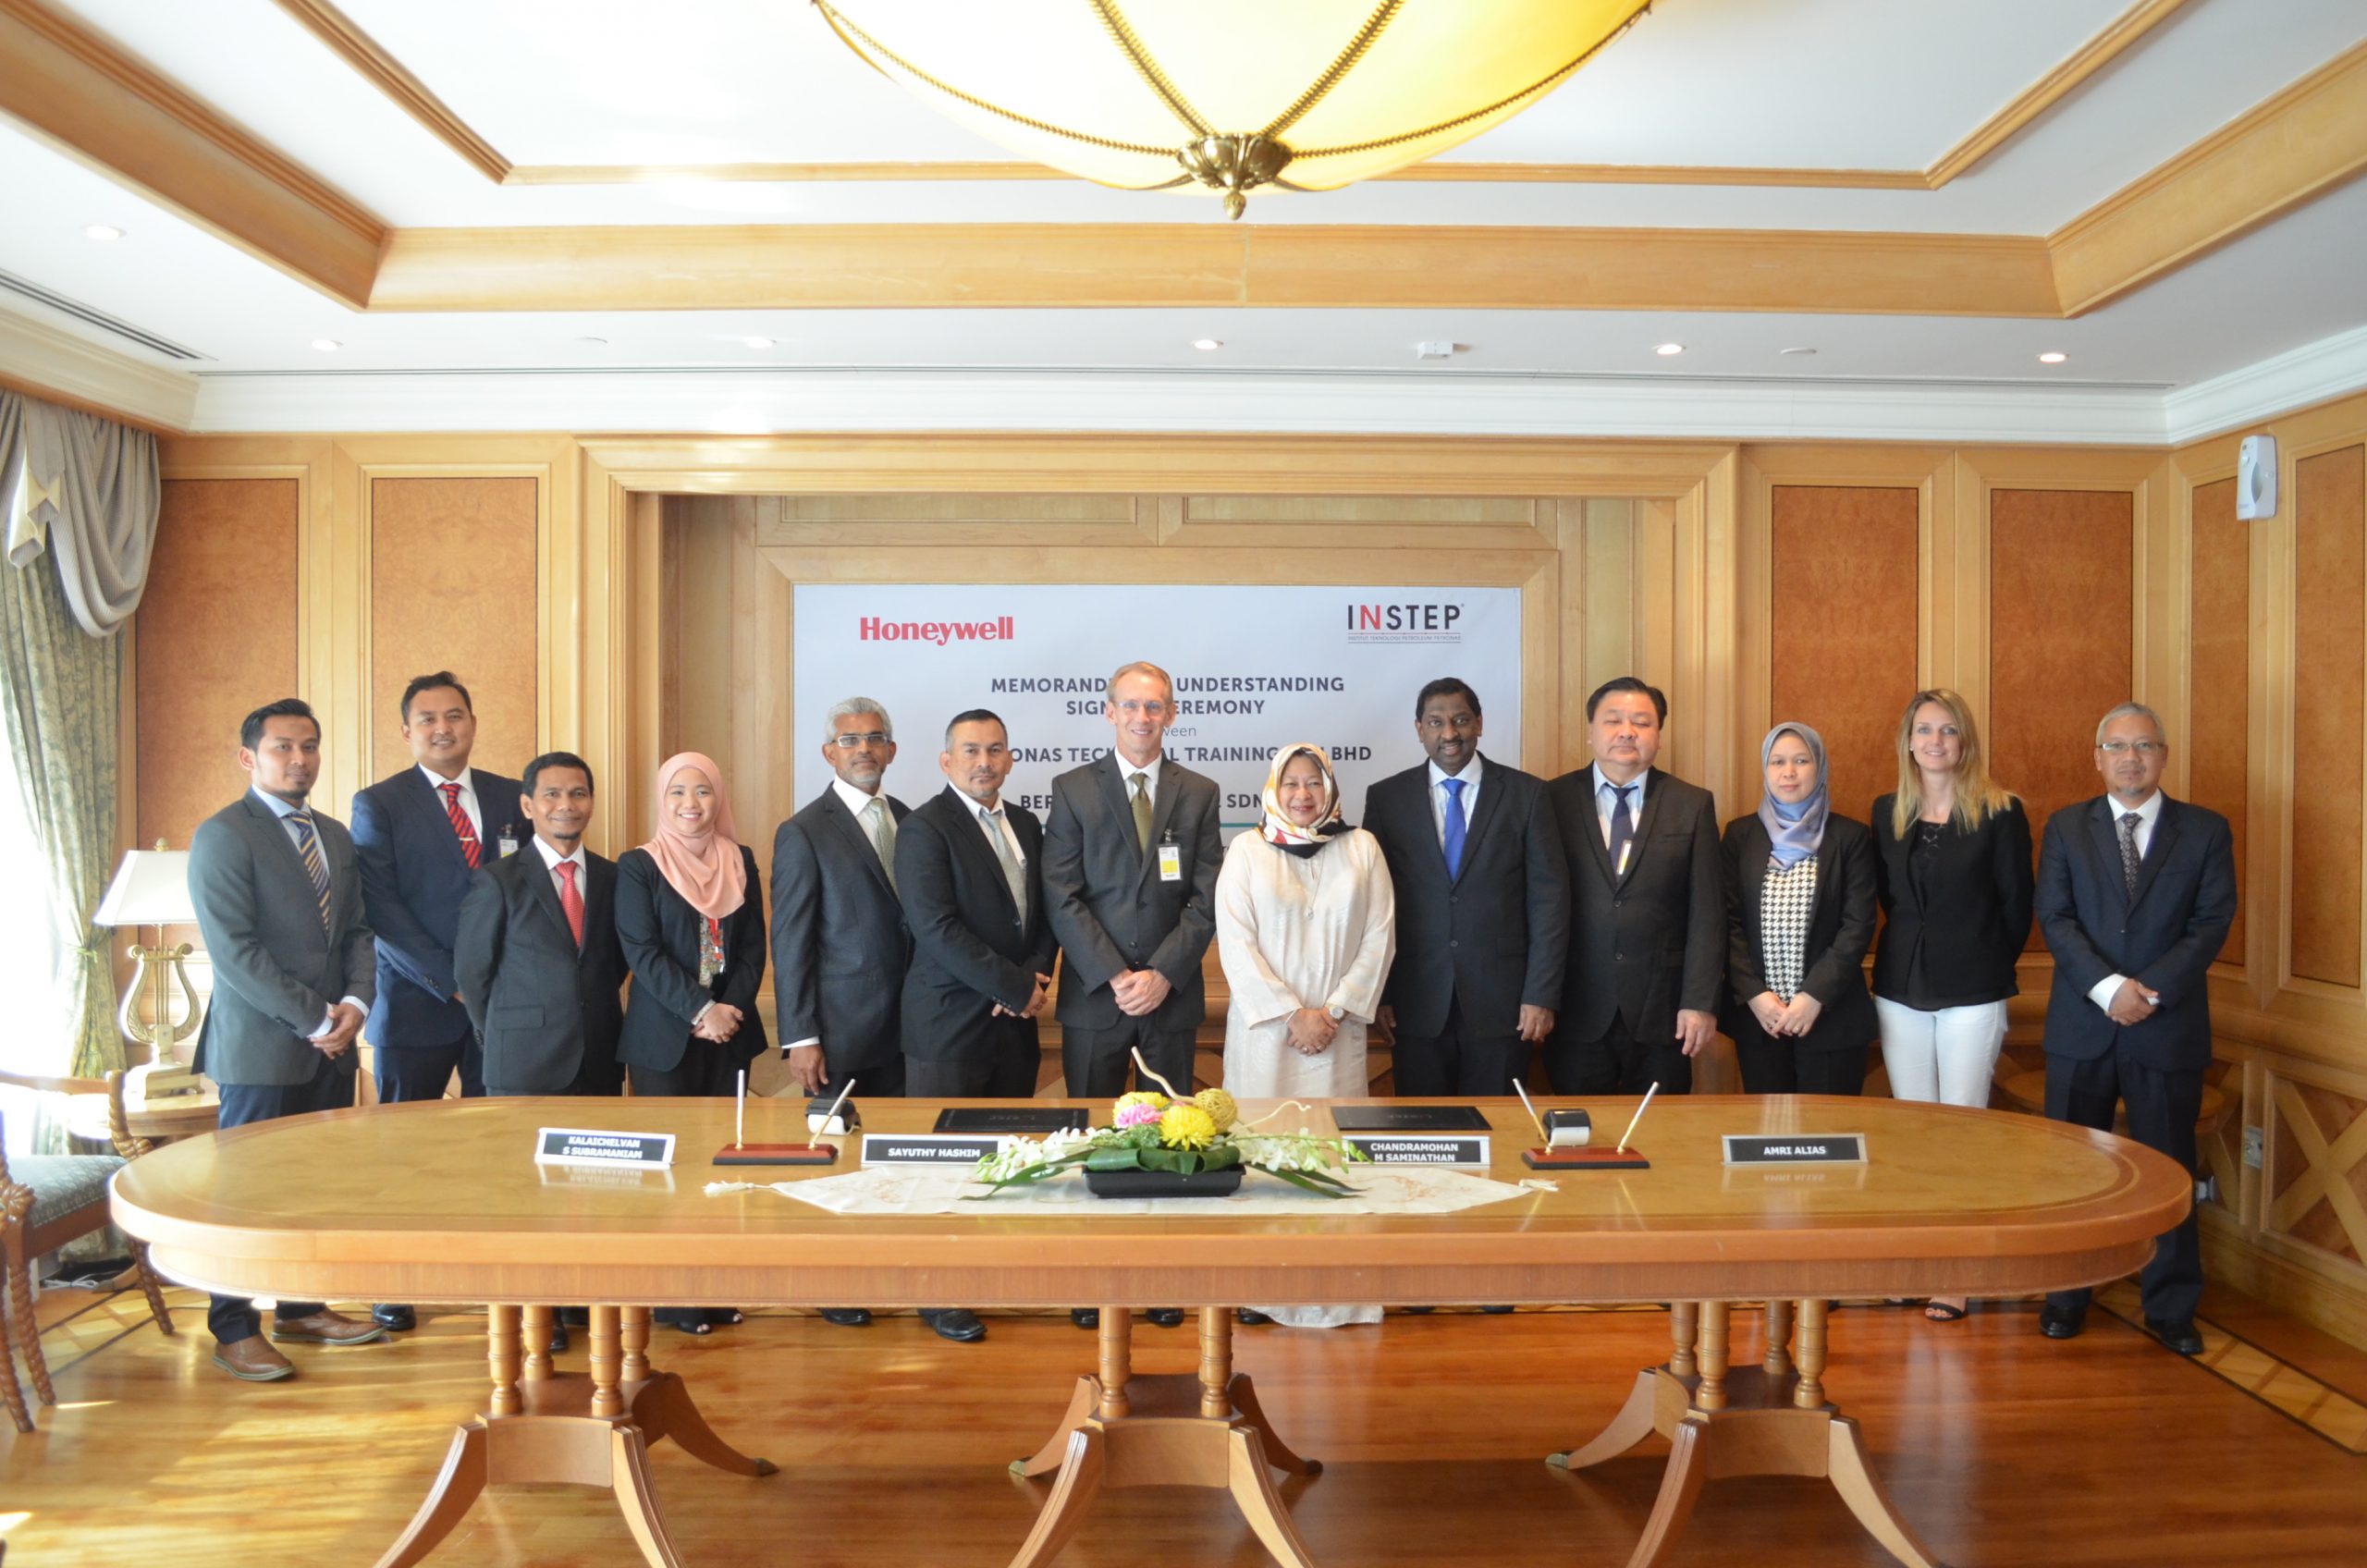 INSTEP marks Strategic Alliance with Honeywell